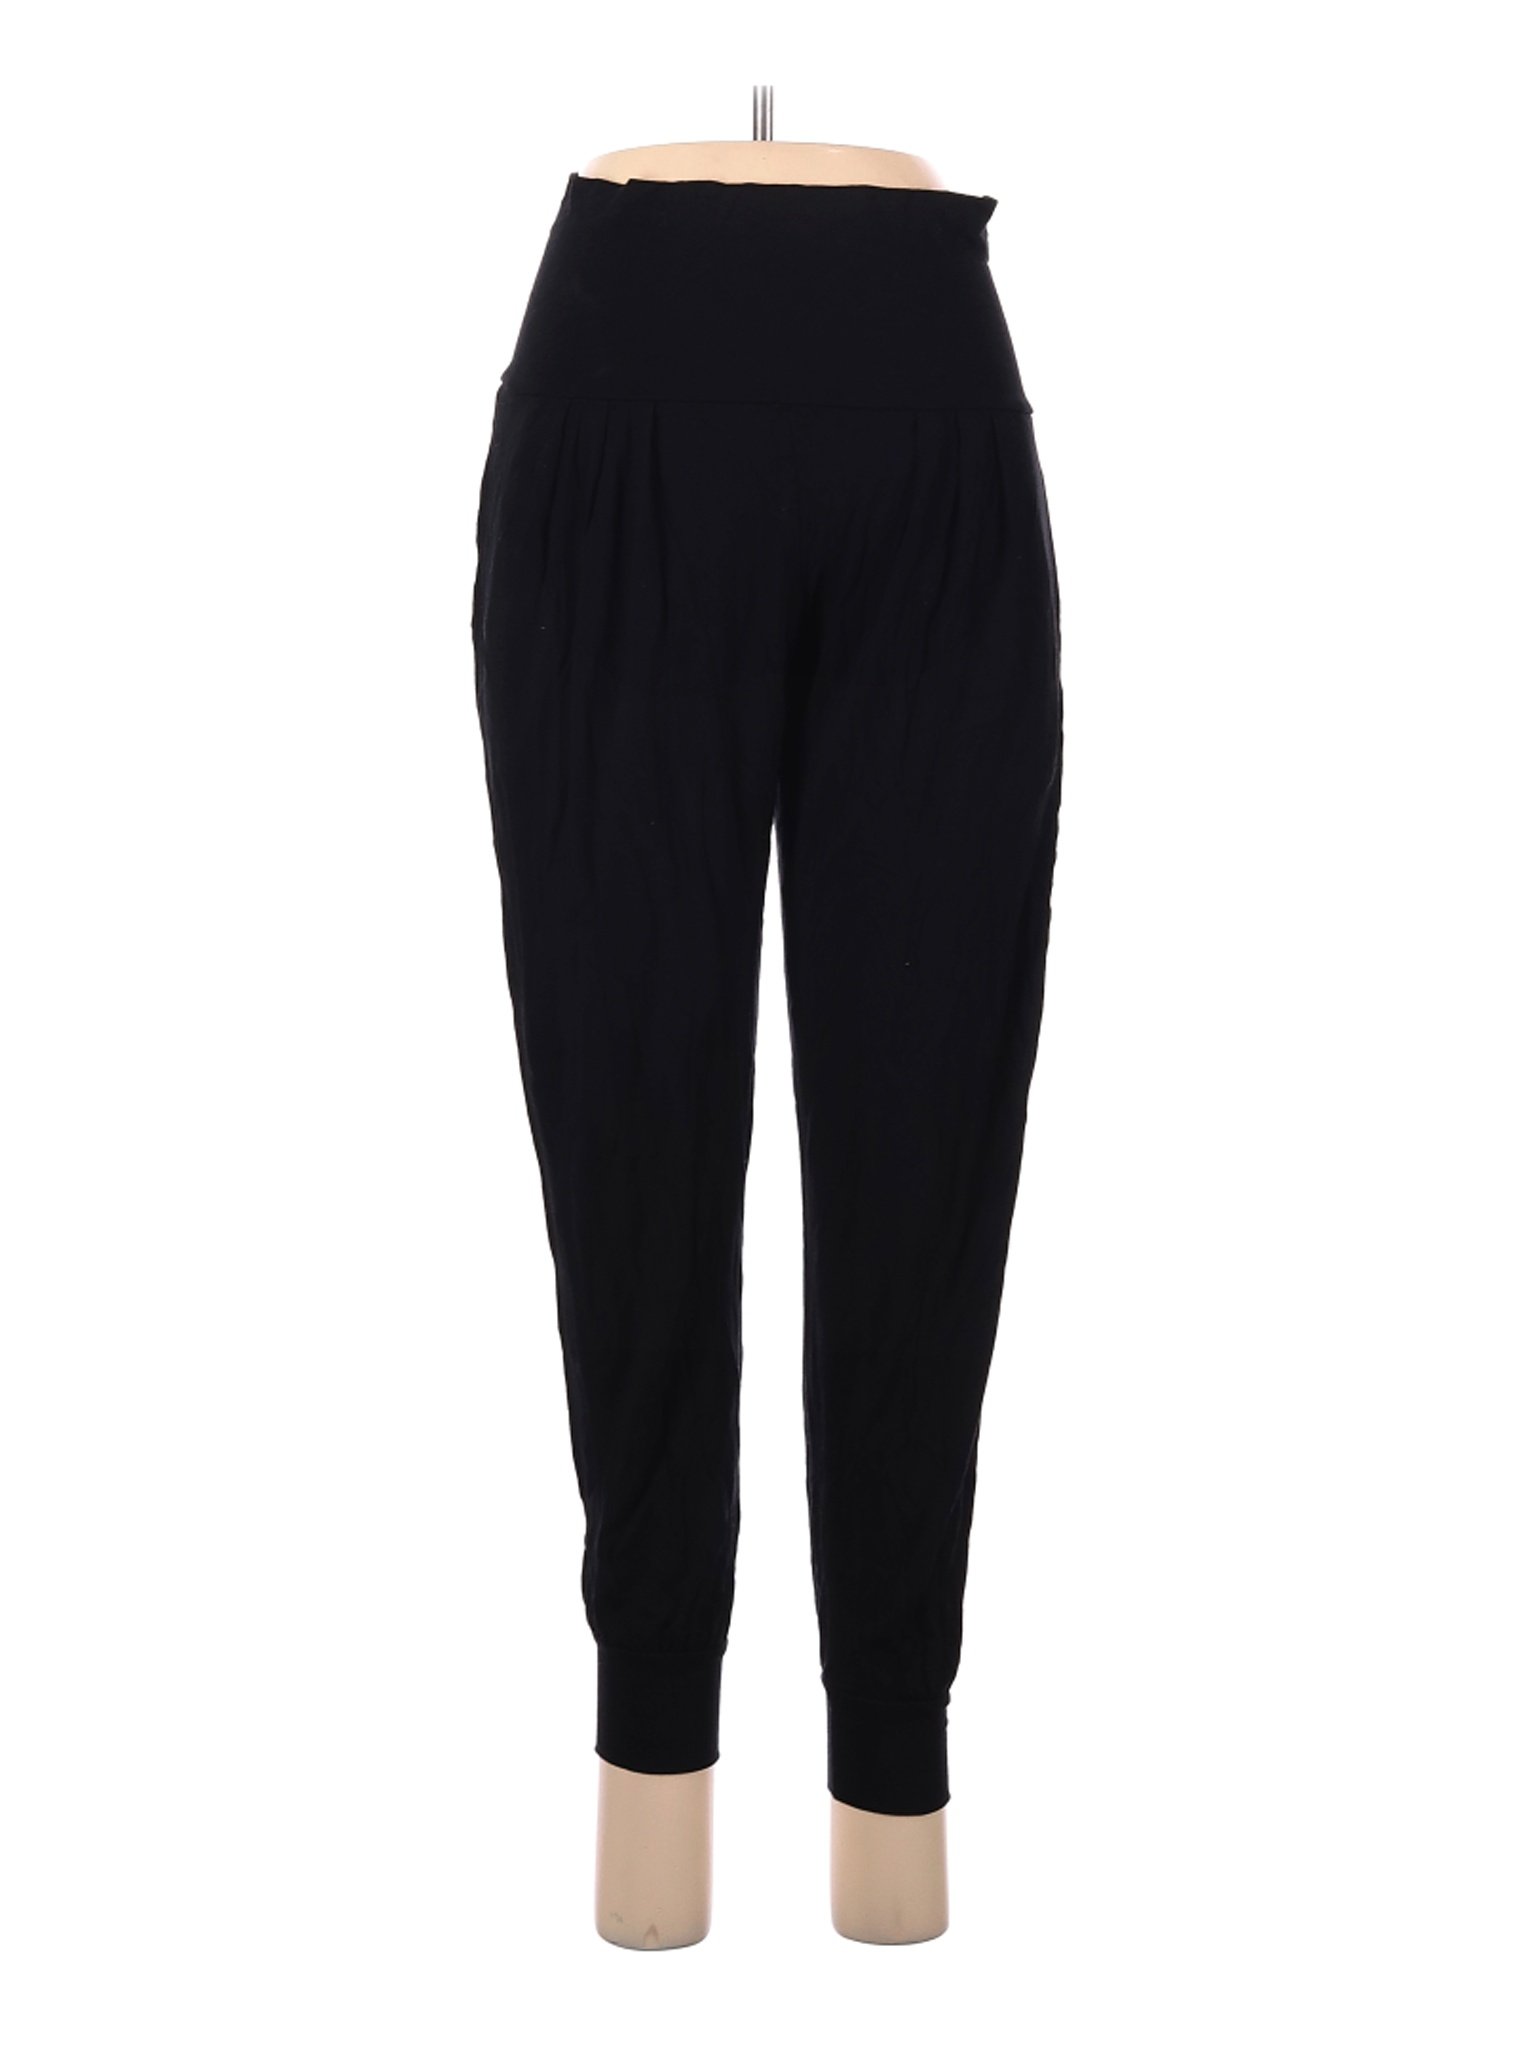 ASOS Women Black Casual Pants 6 | eBay